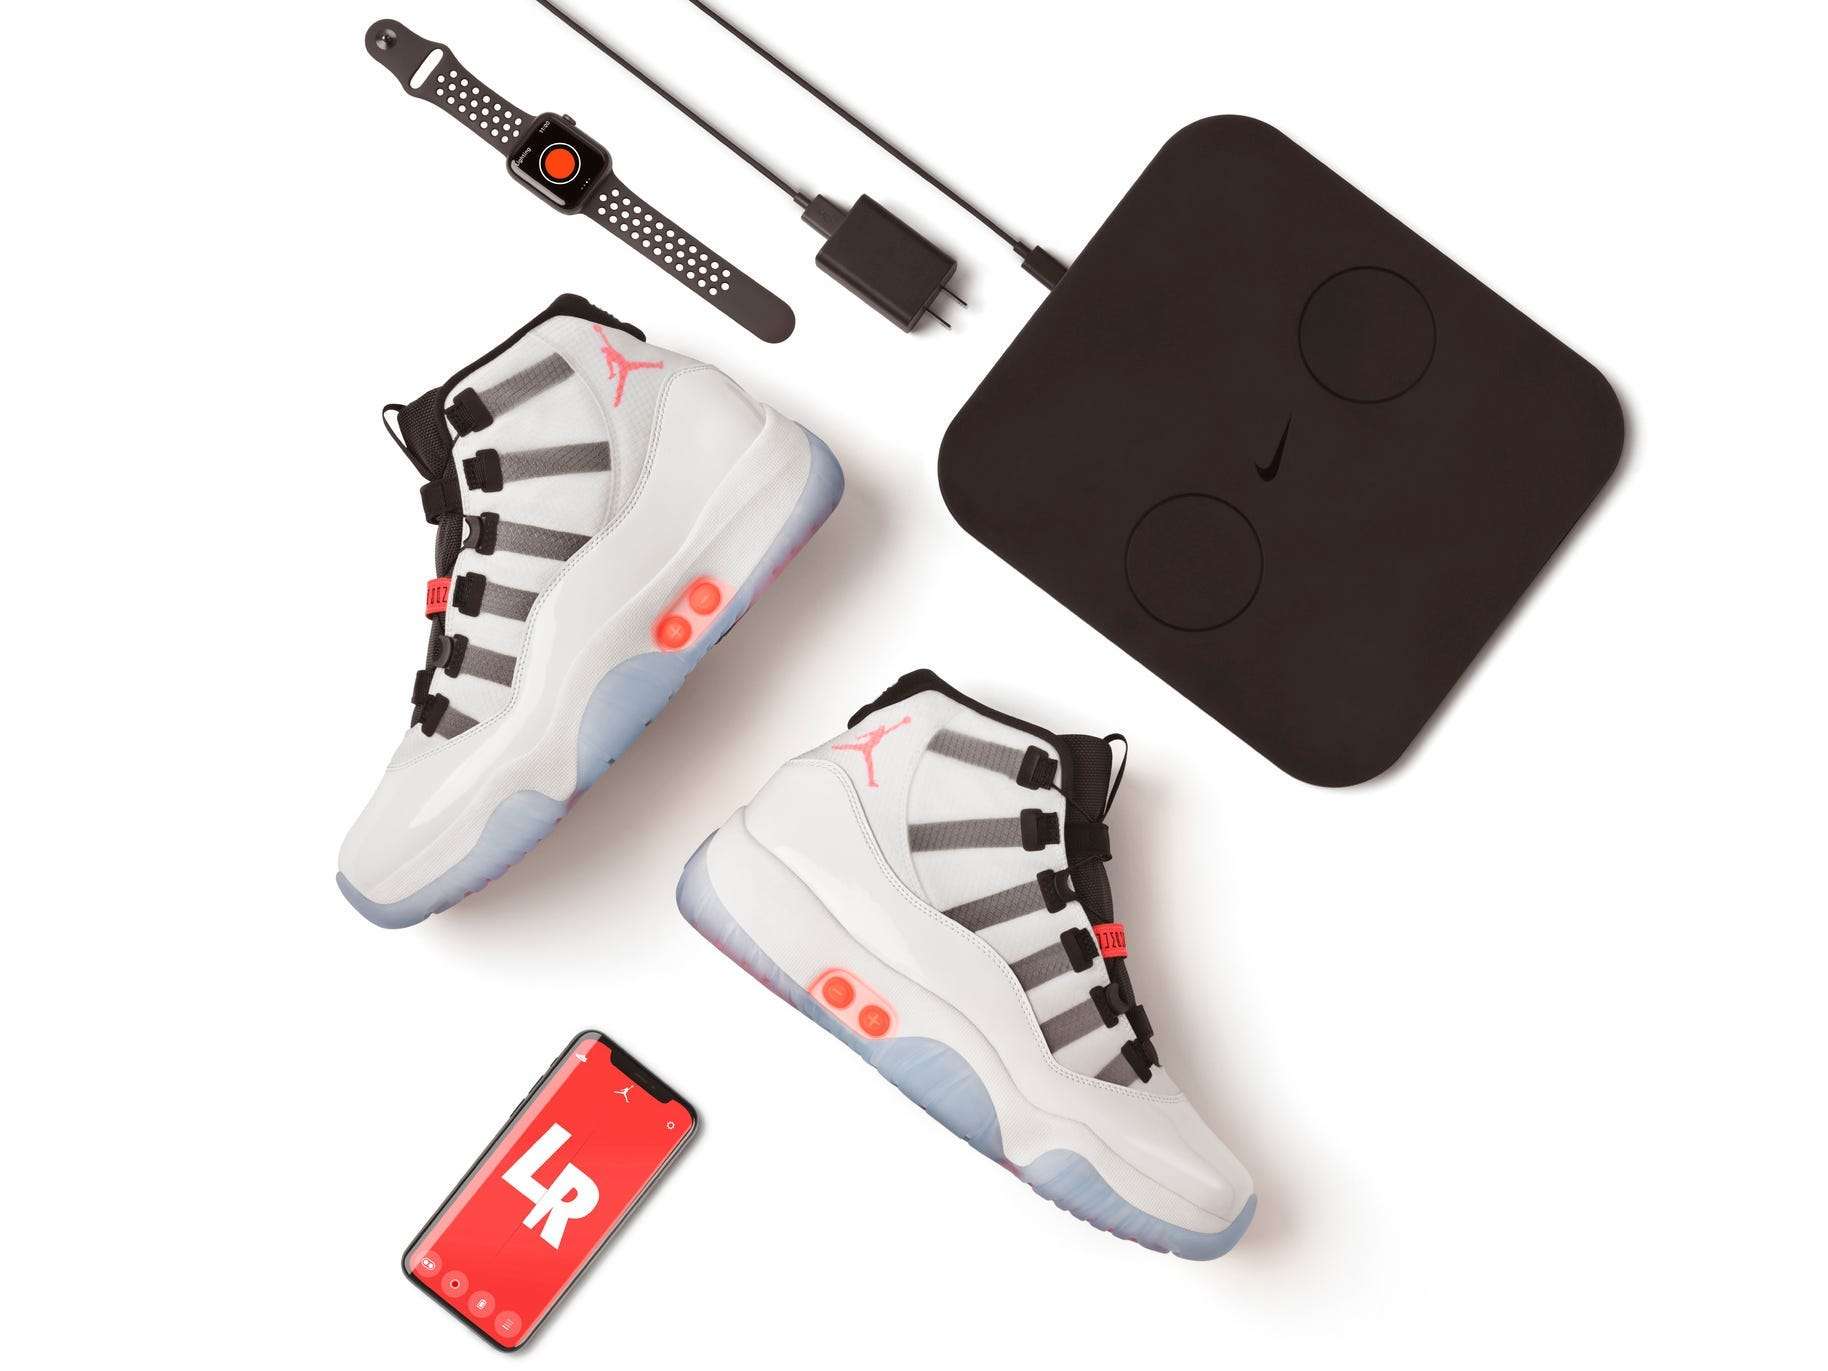 Nike's first self-lacing Air Jordans 